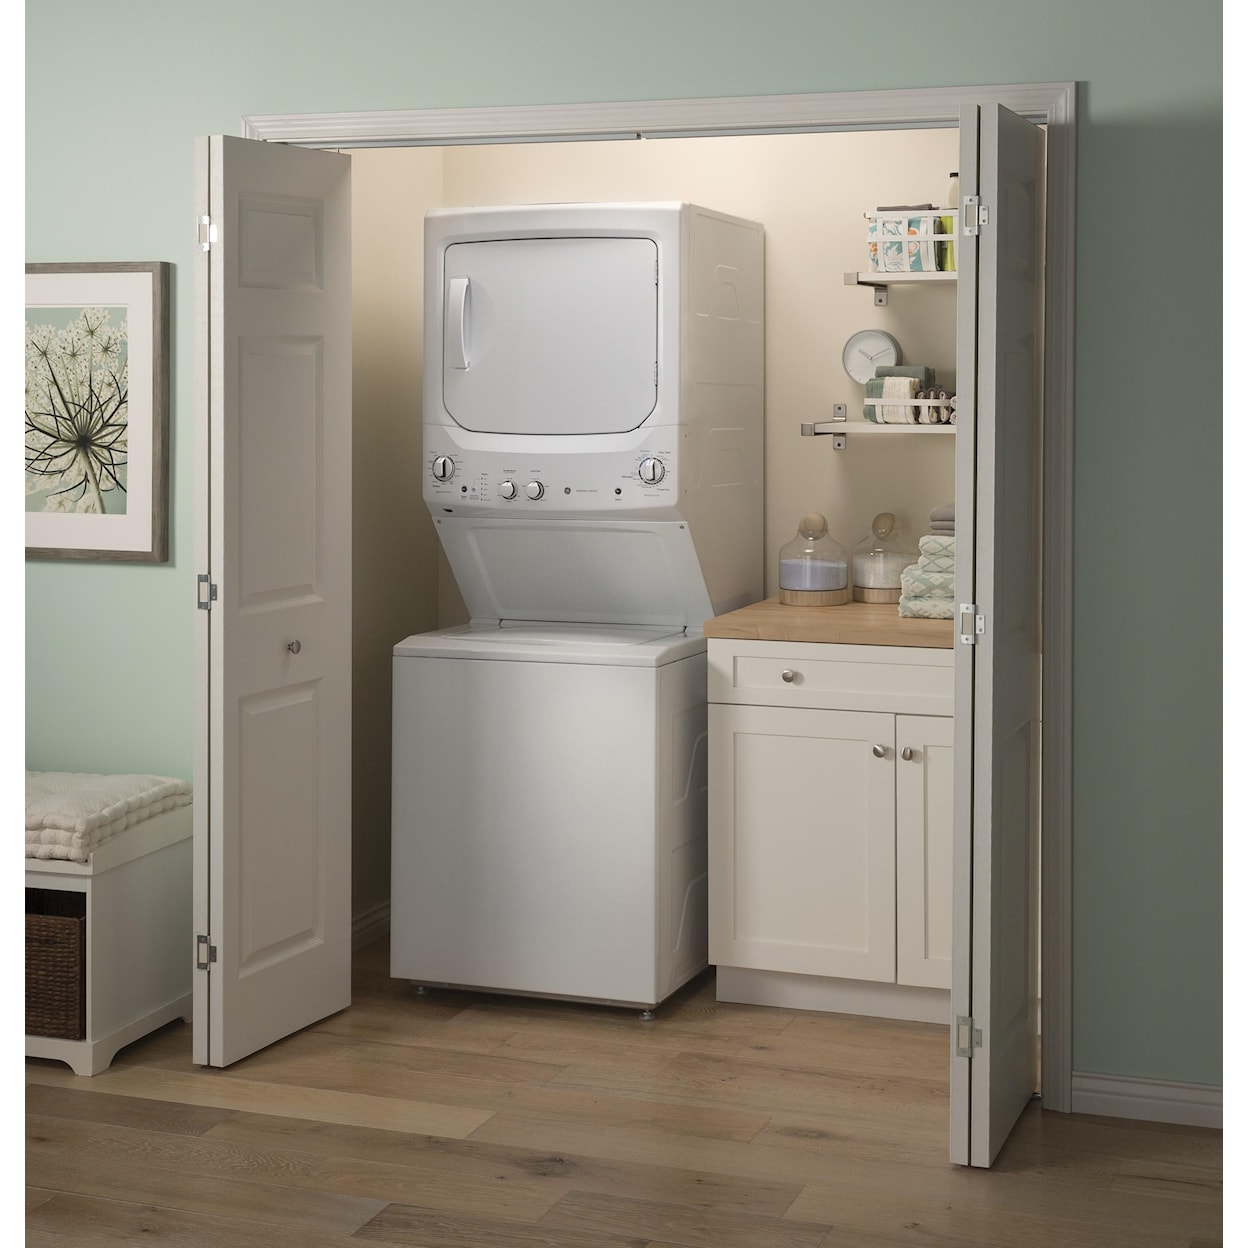 GE Appliances Laundry Washer & Dryer Combo